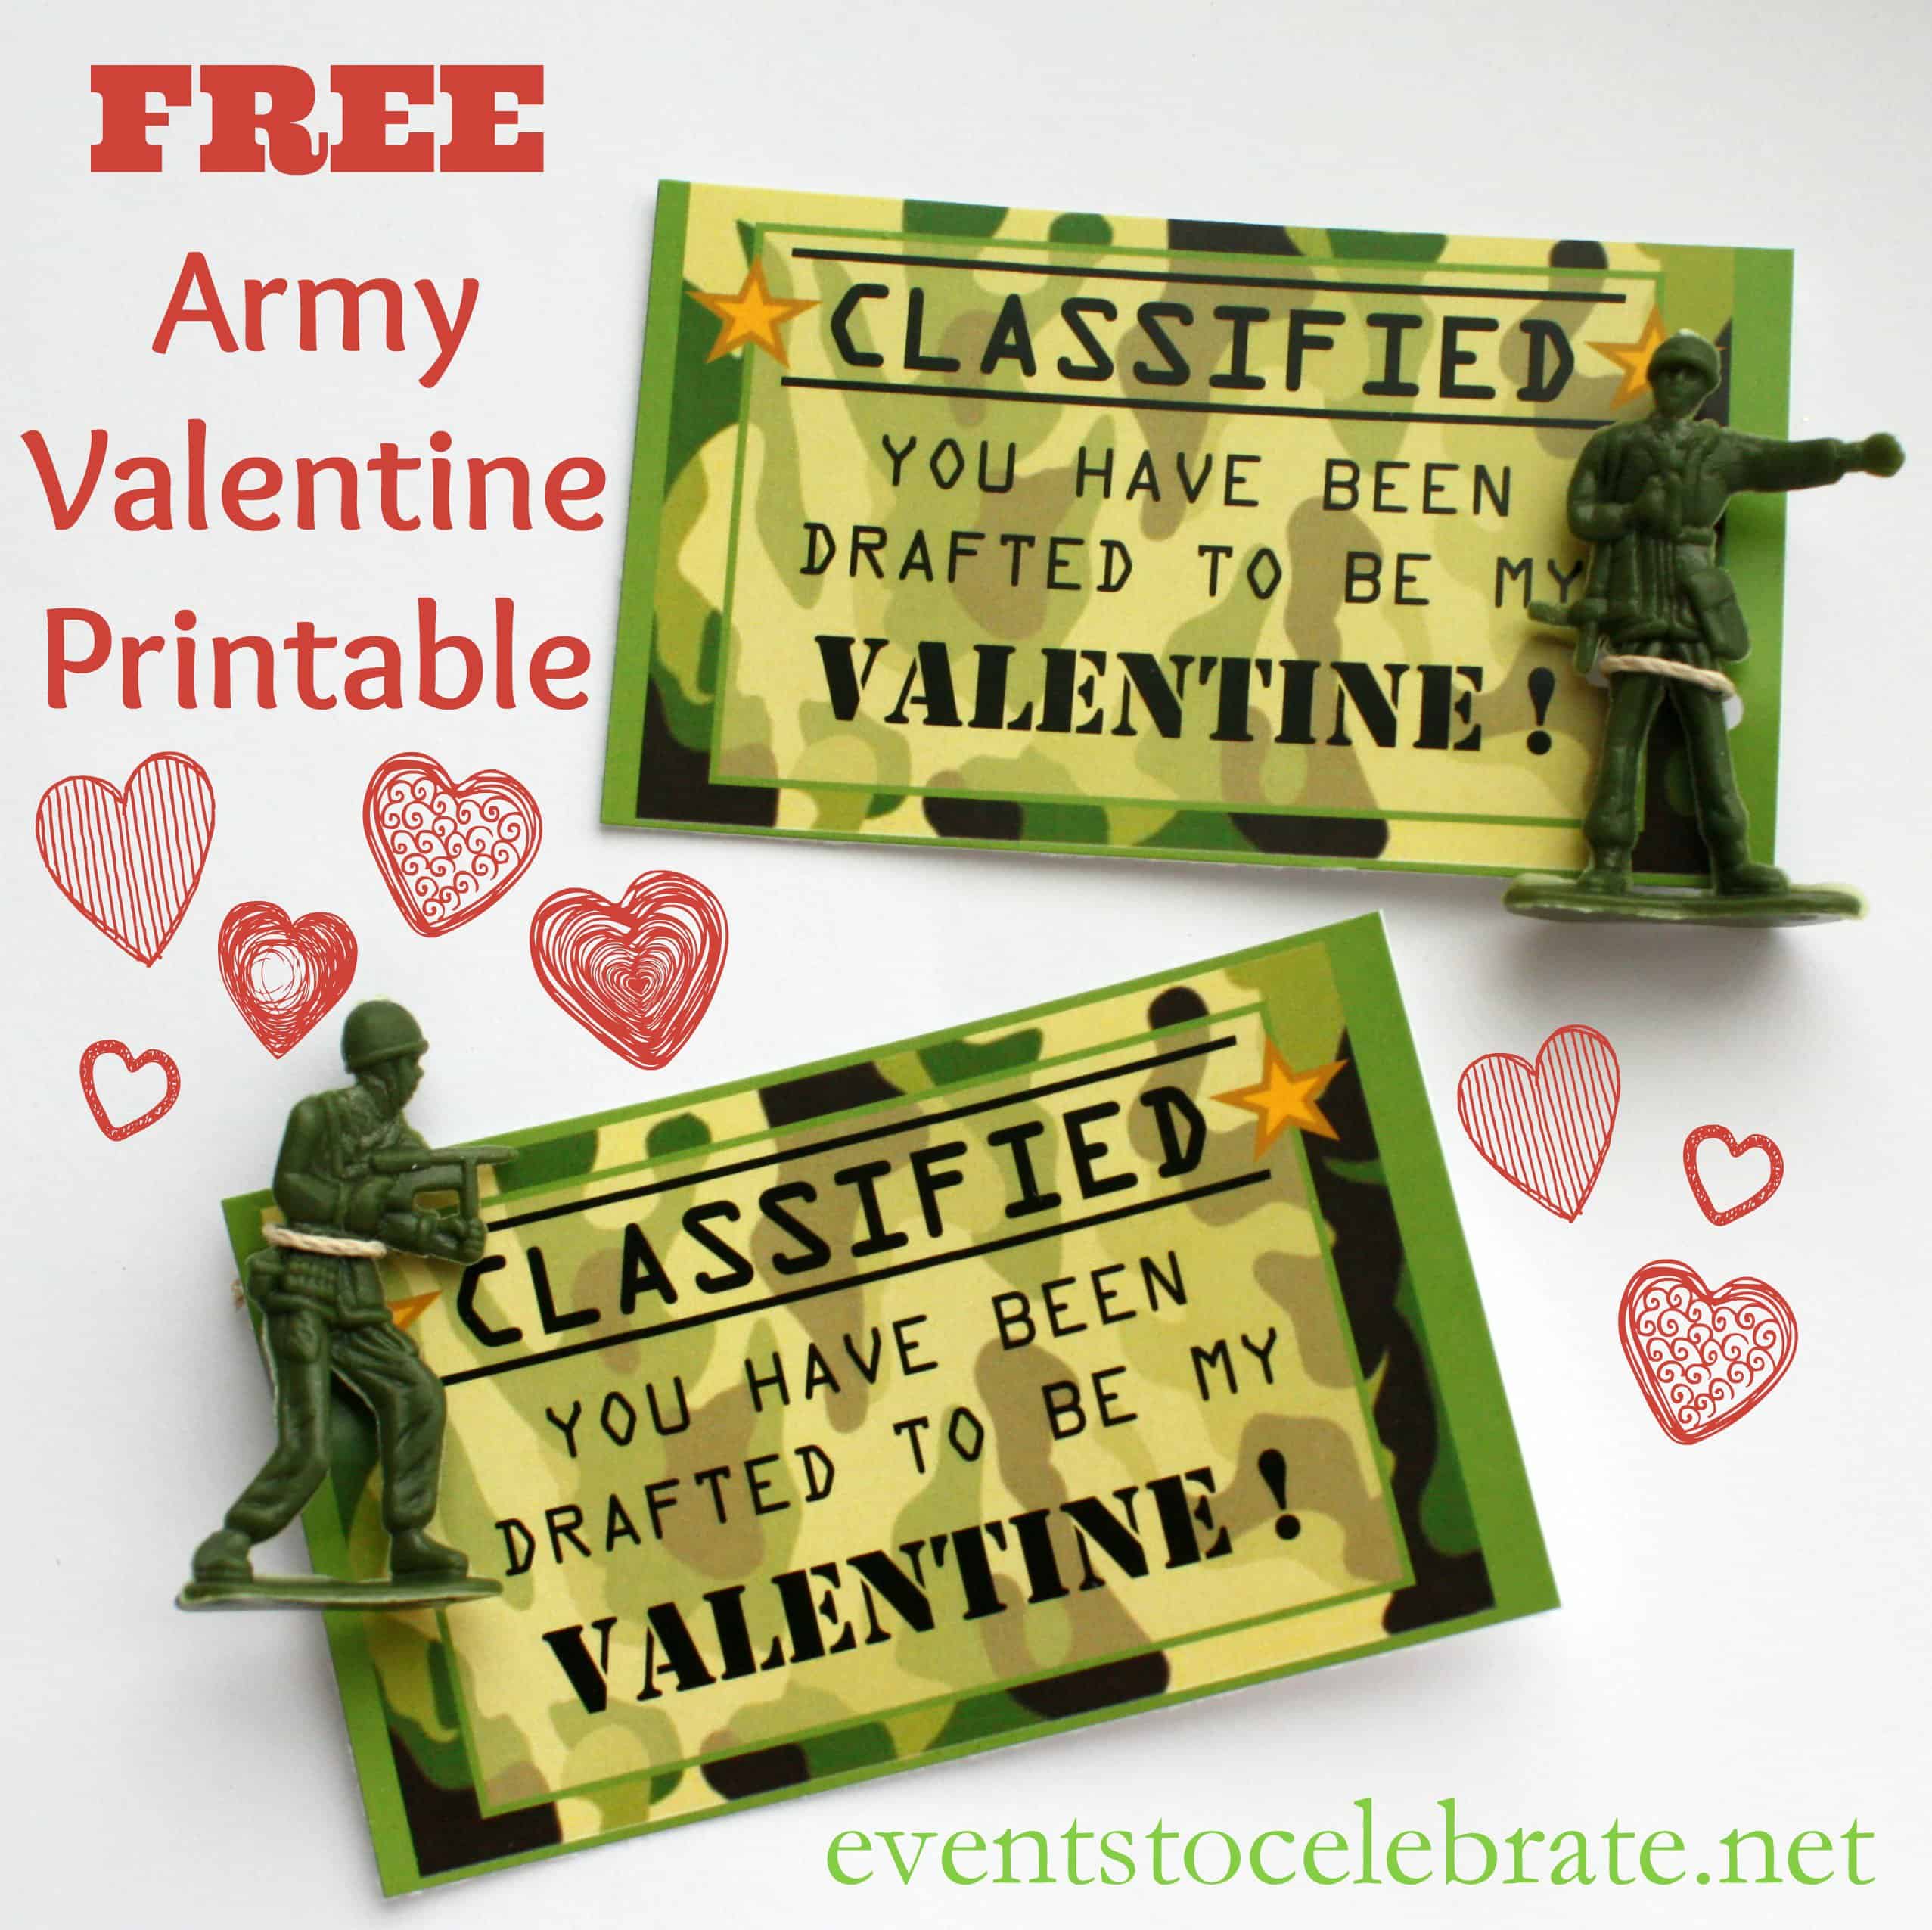 Free Printable Valentine - ARMY - events to CELEBRATE!